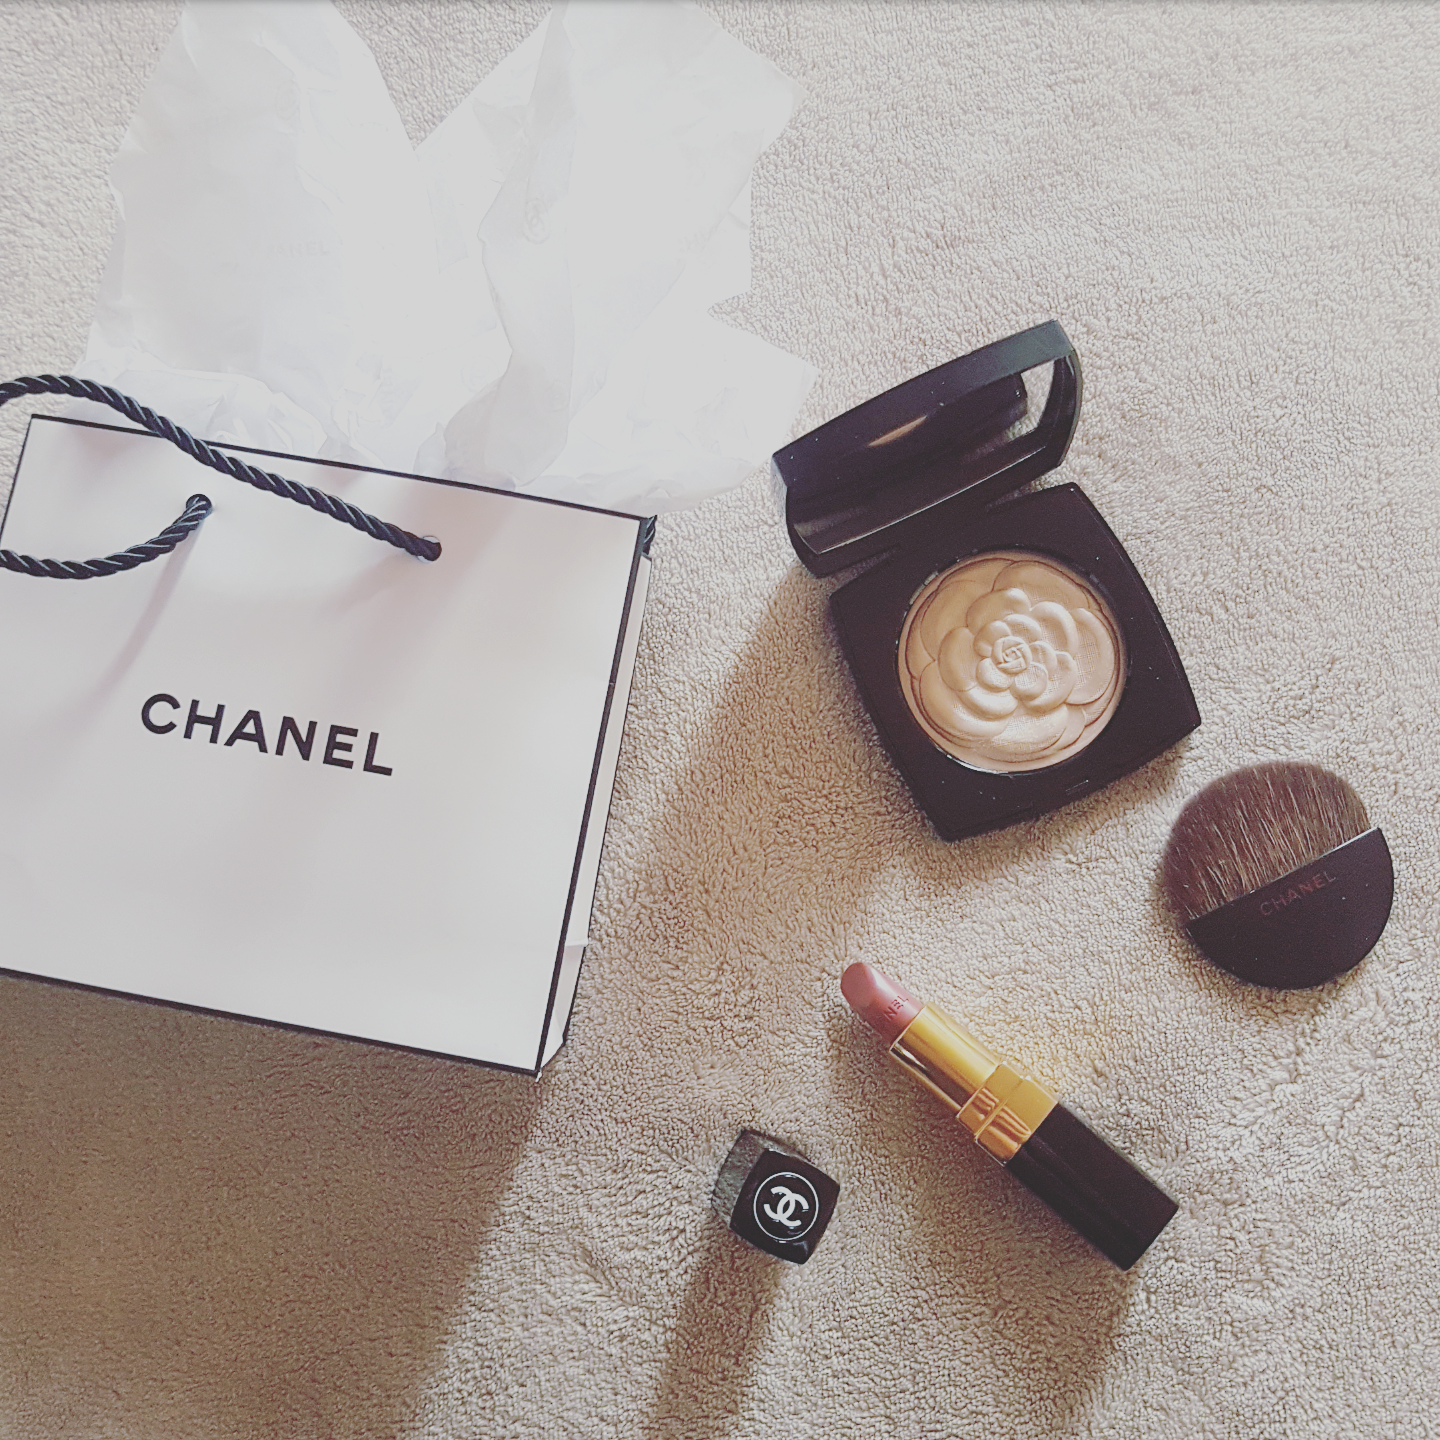 Chanel makeup online usa